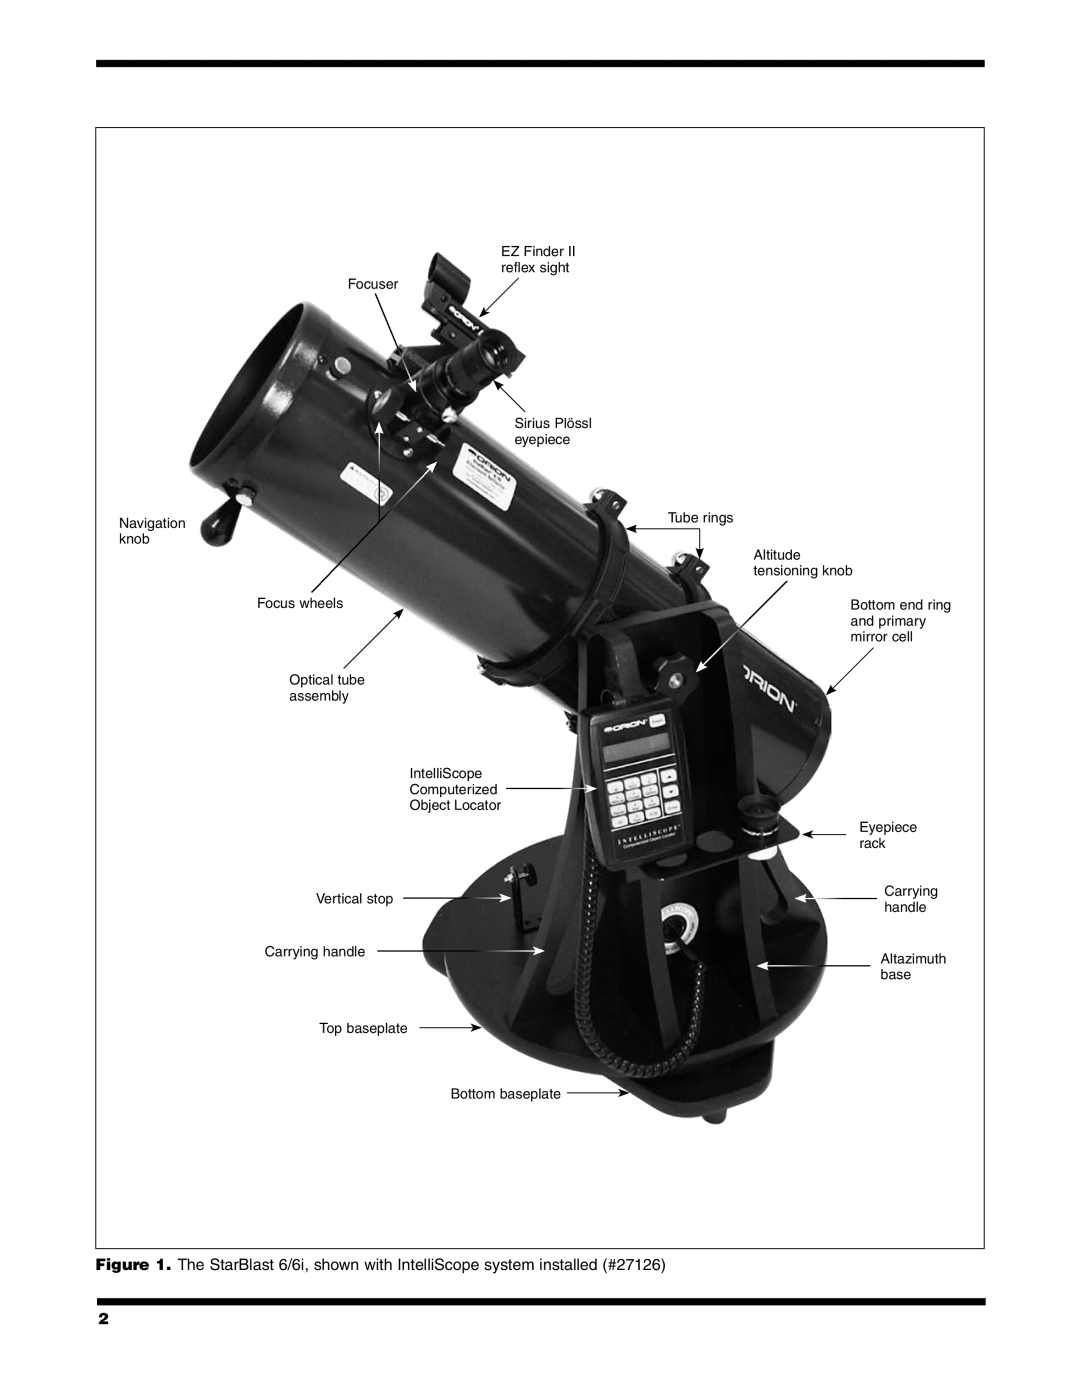 Orion 6/6I instruction manual Navigation knob 